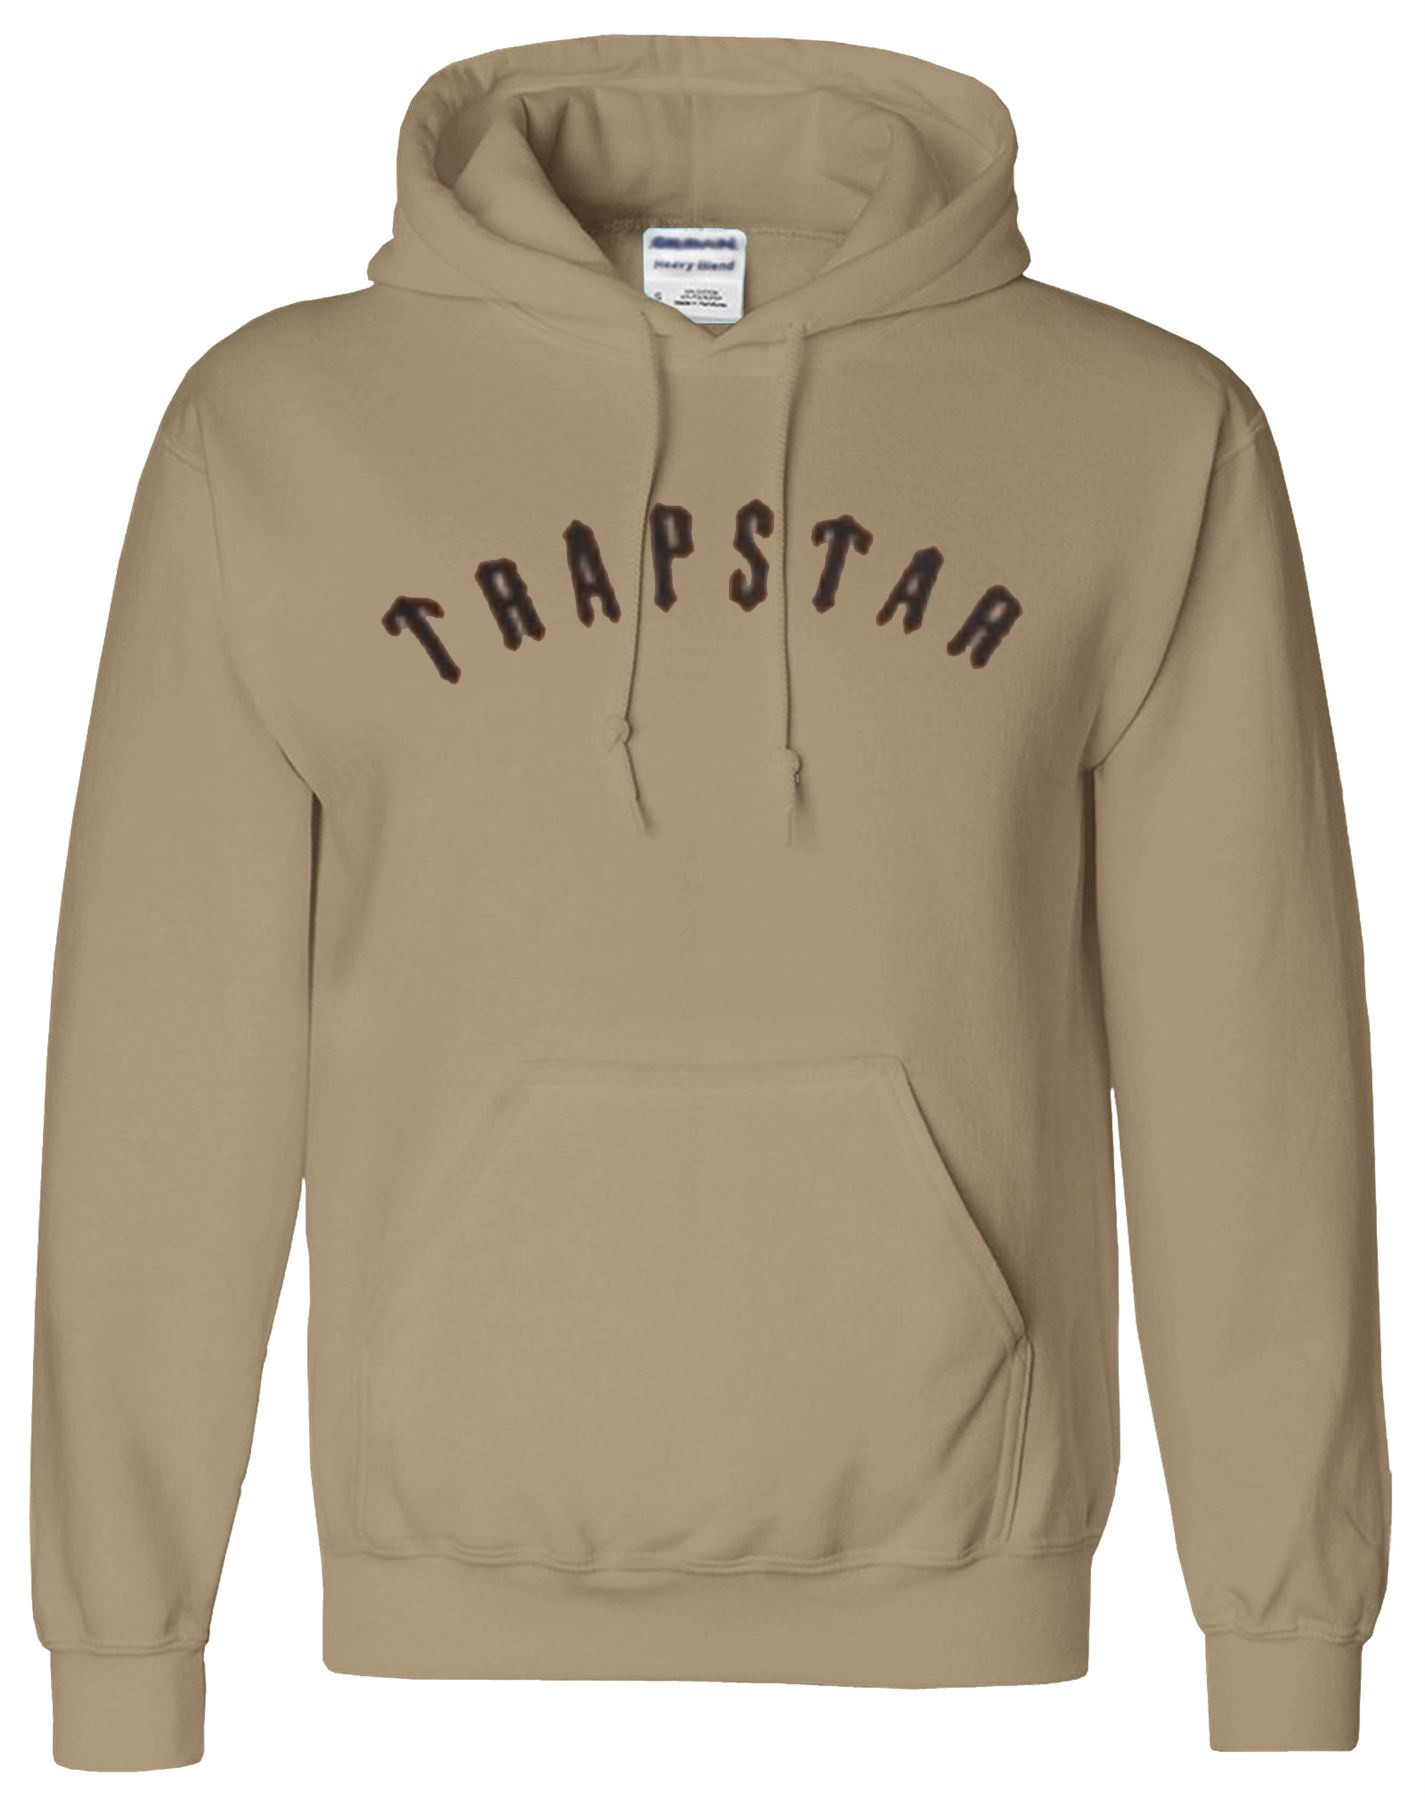 trapstar hoodie white